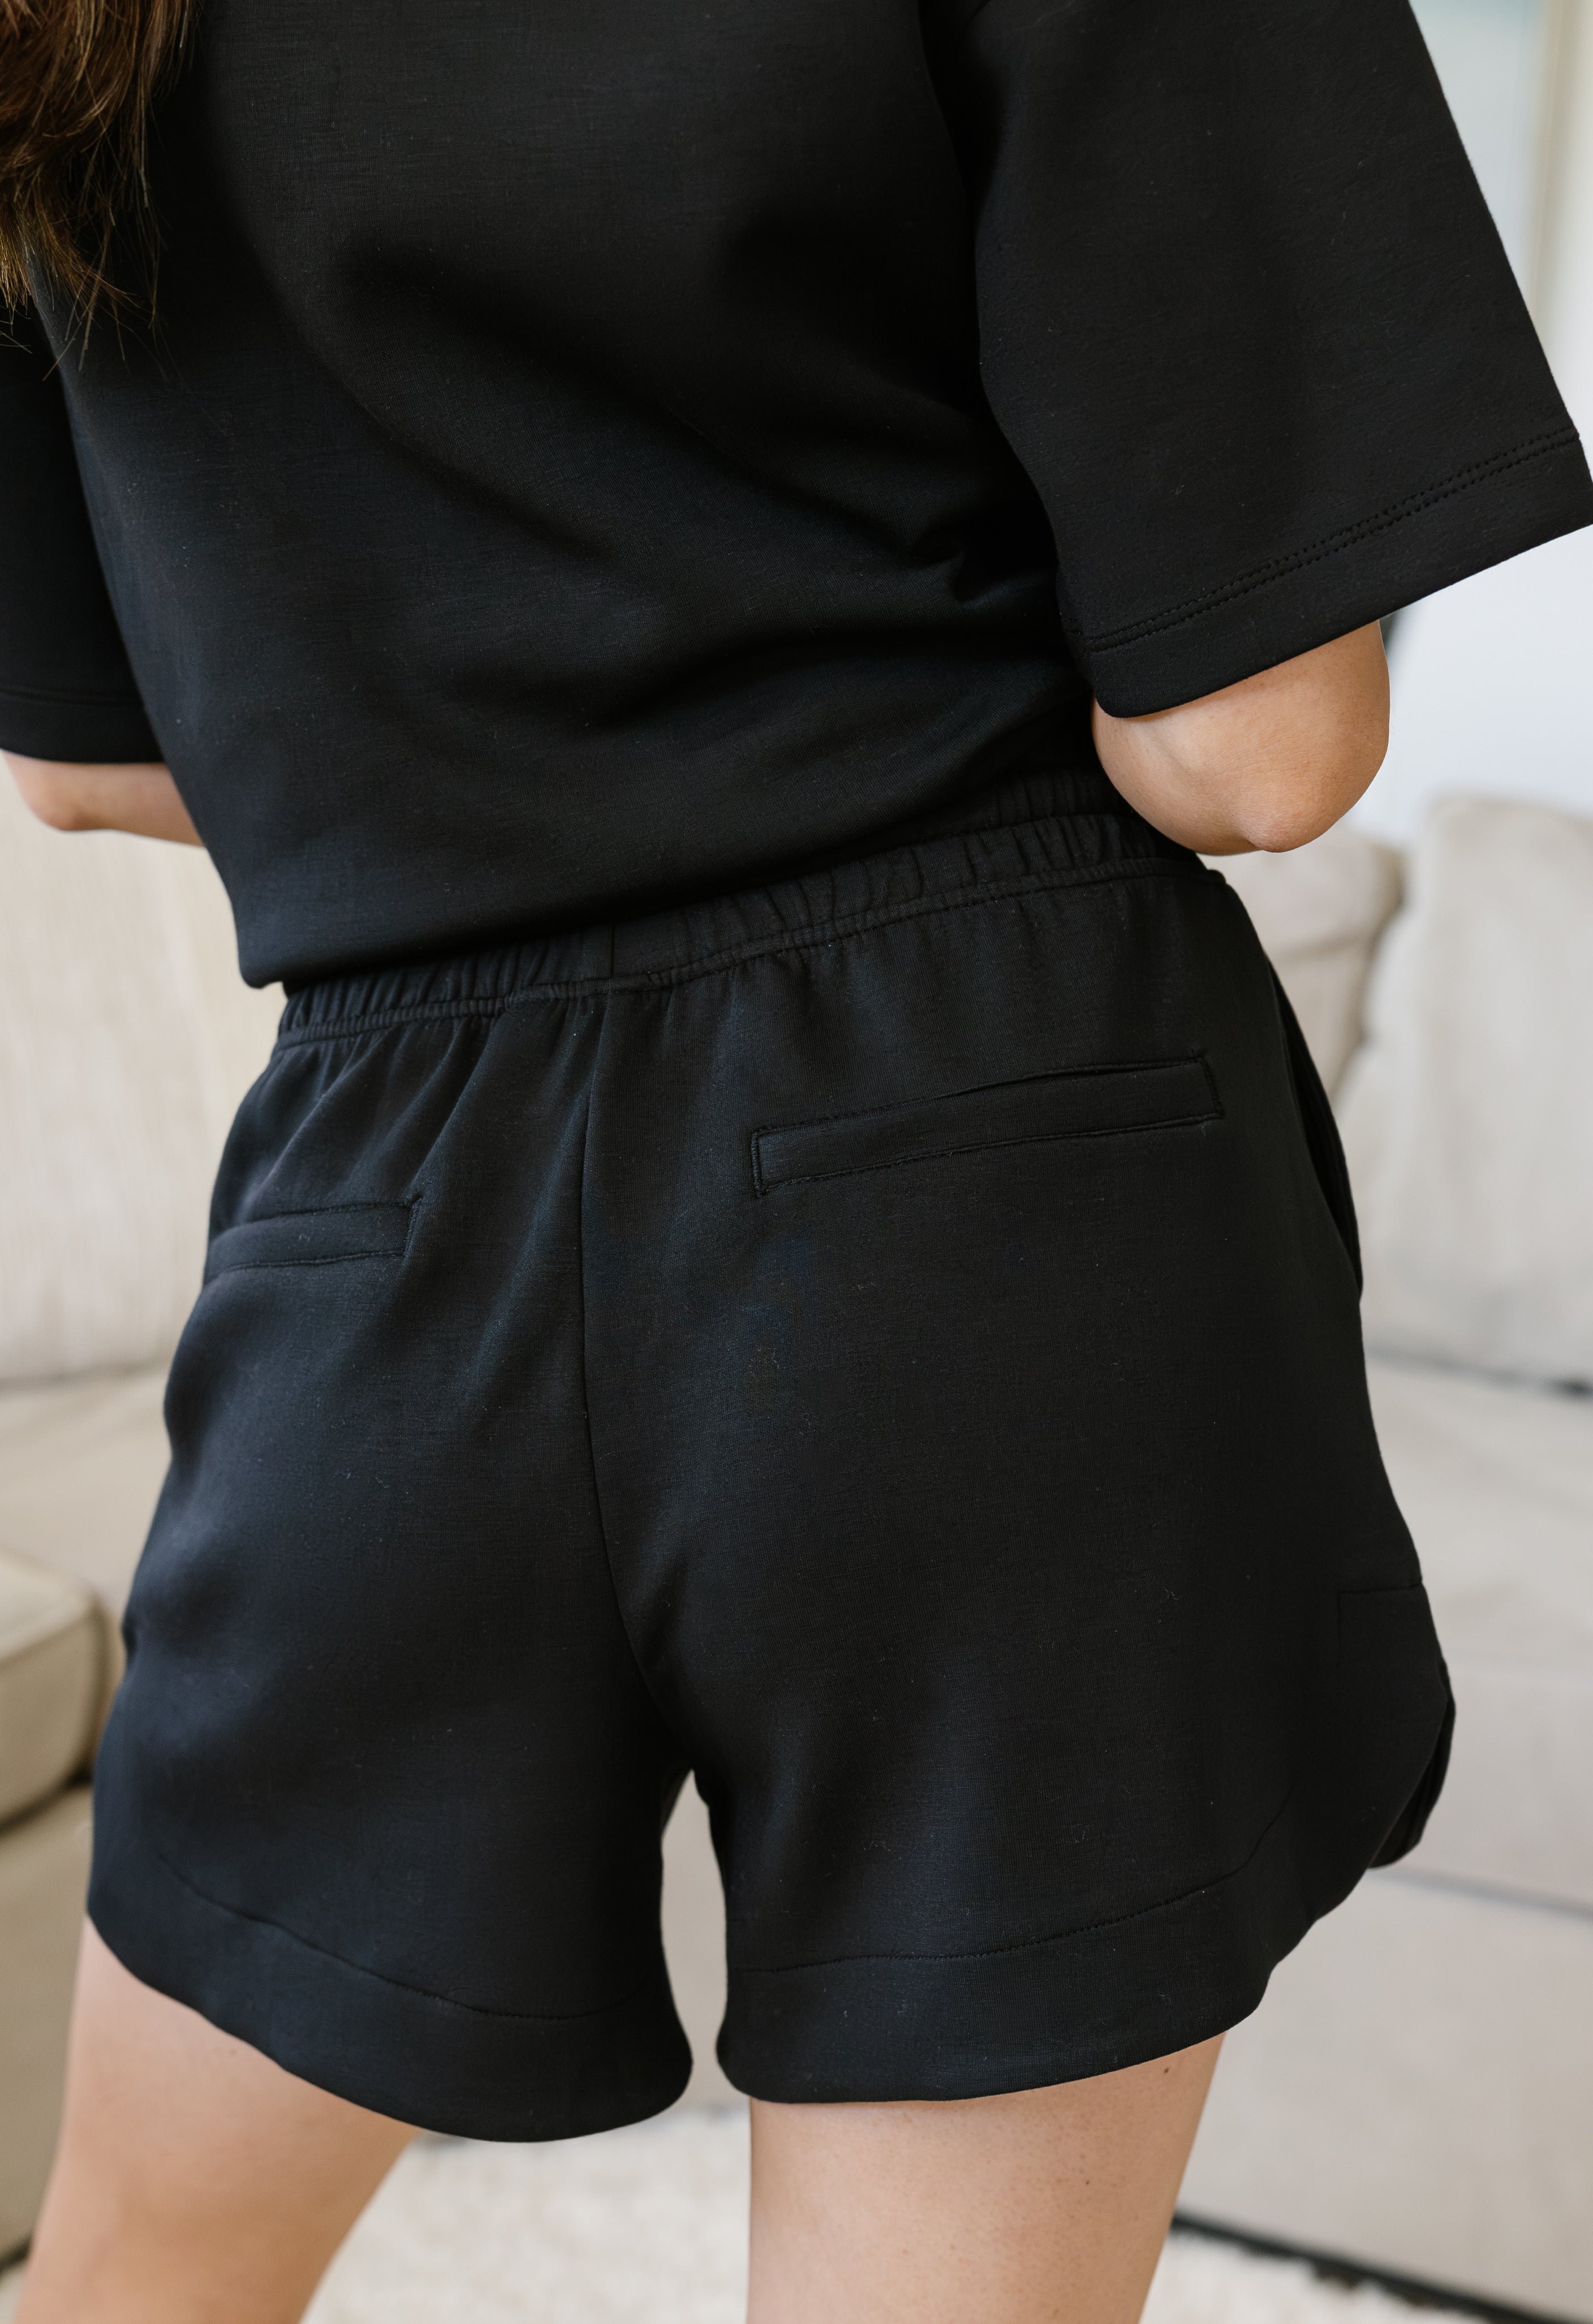 Kiera Shorts - BLACK - willows clothing SHORTS